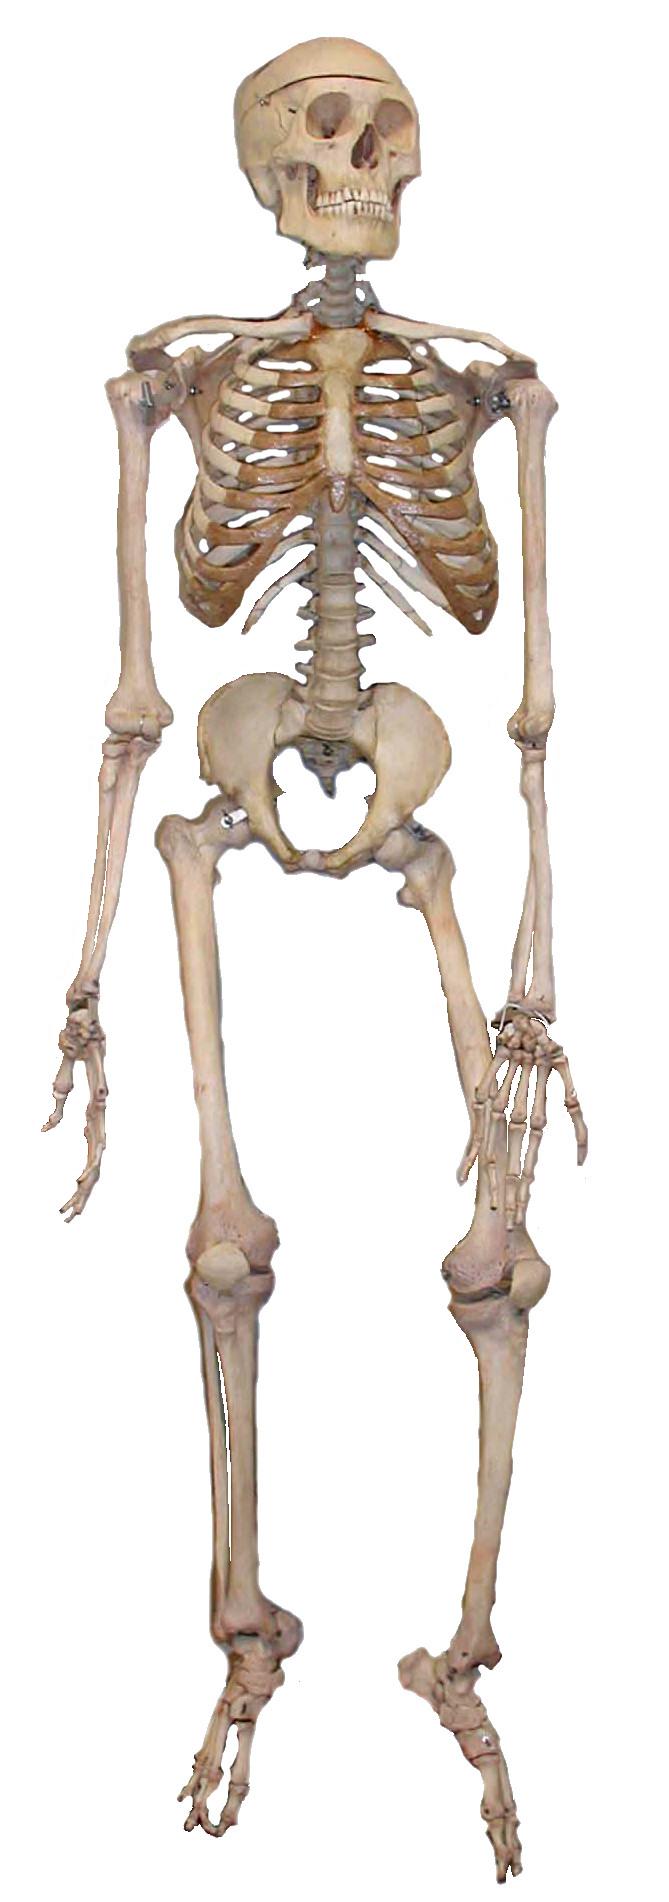 Human skeleton - wikidoc